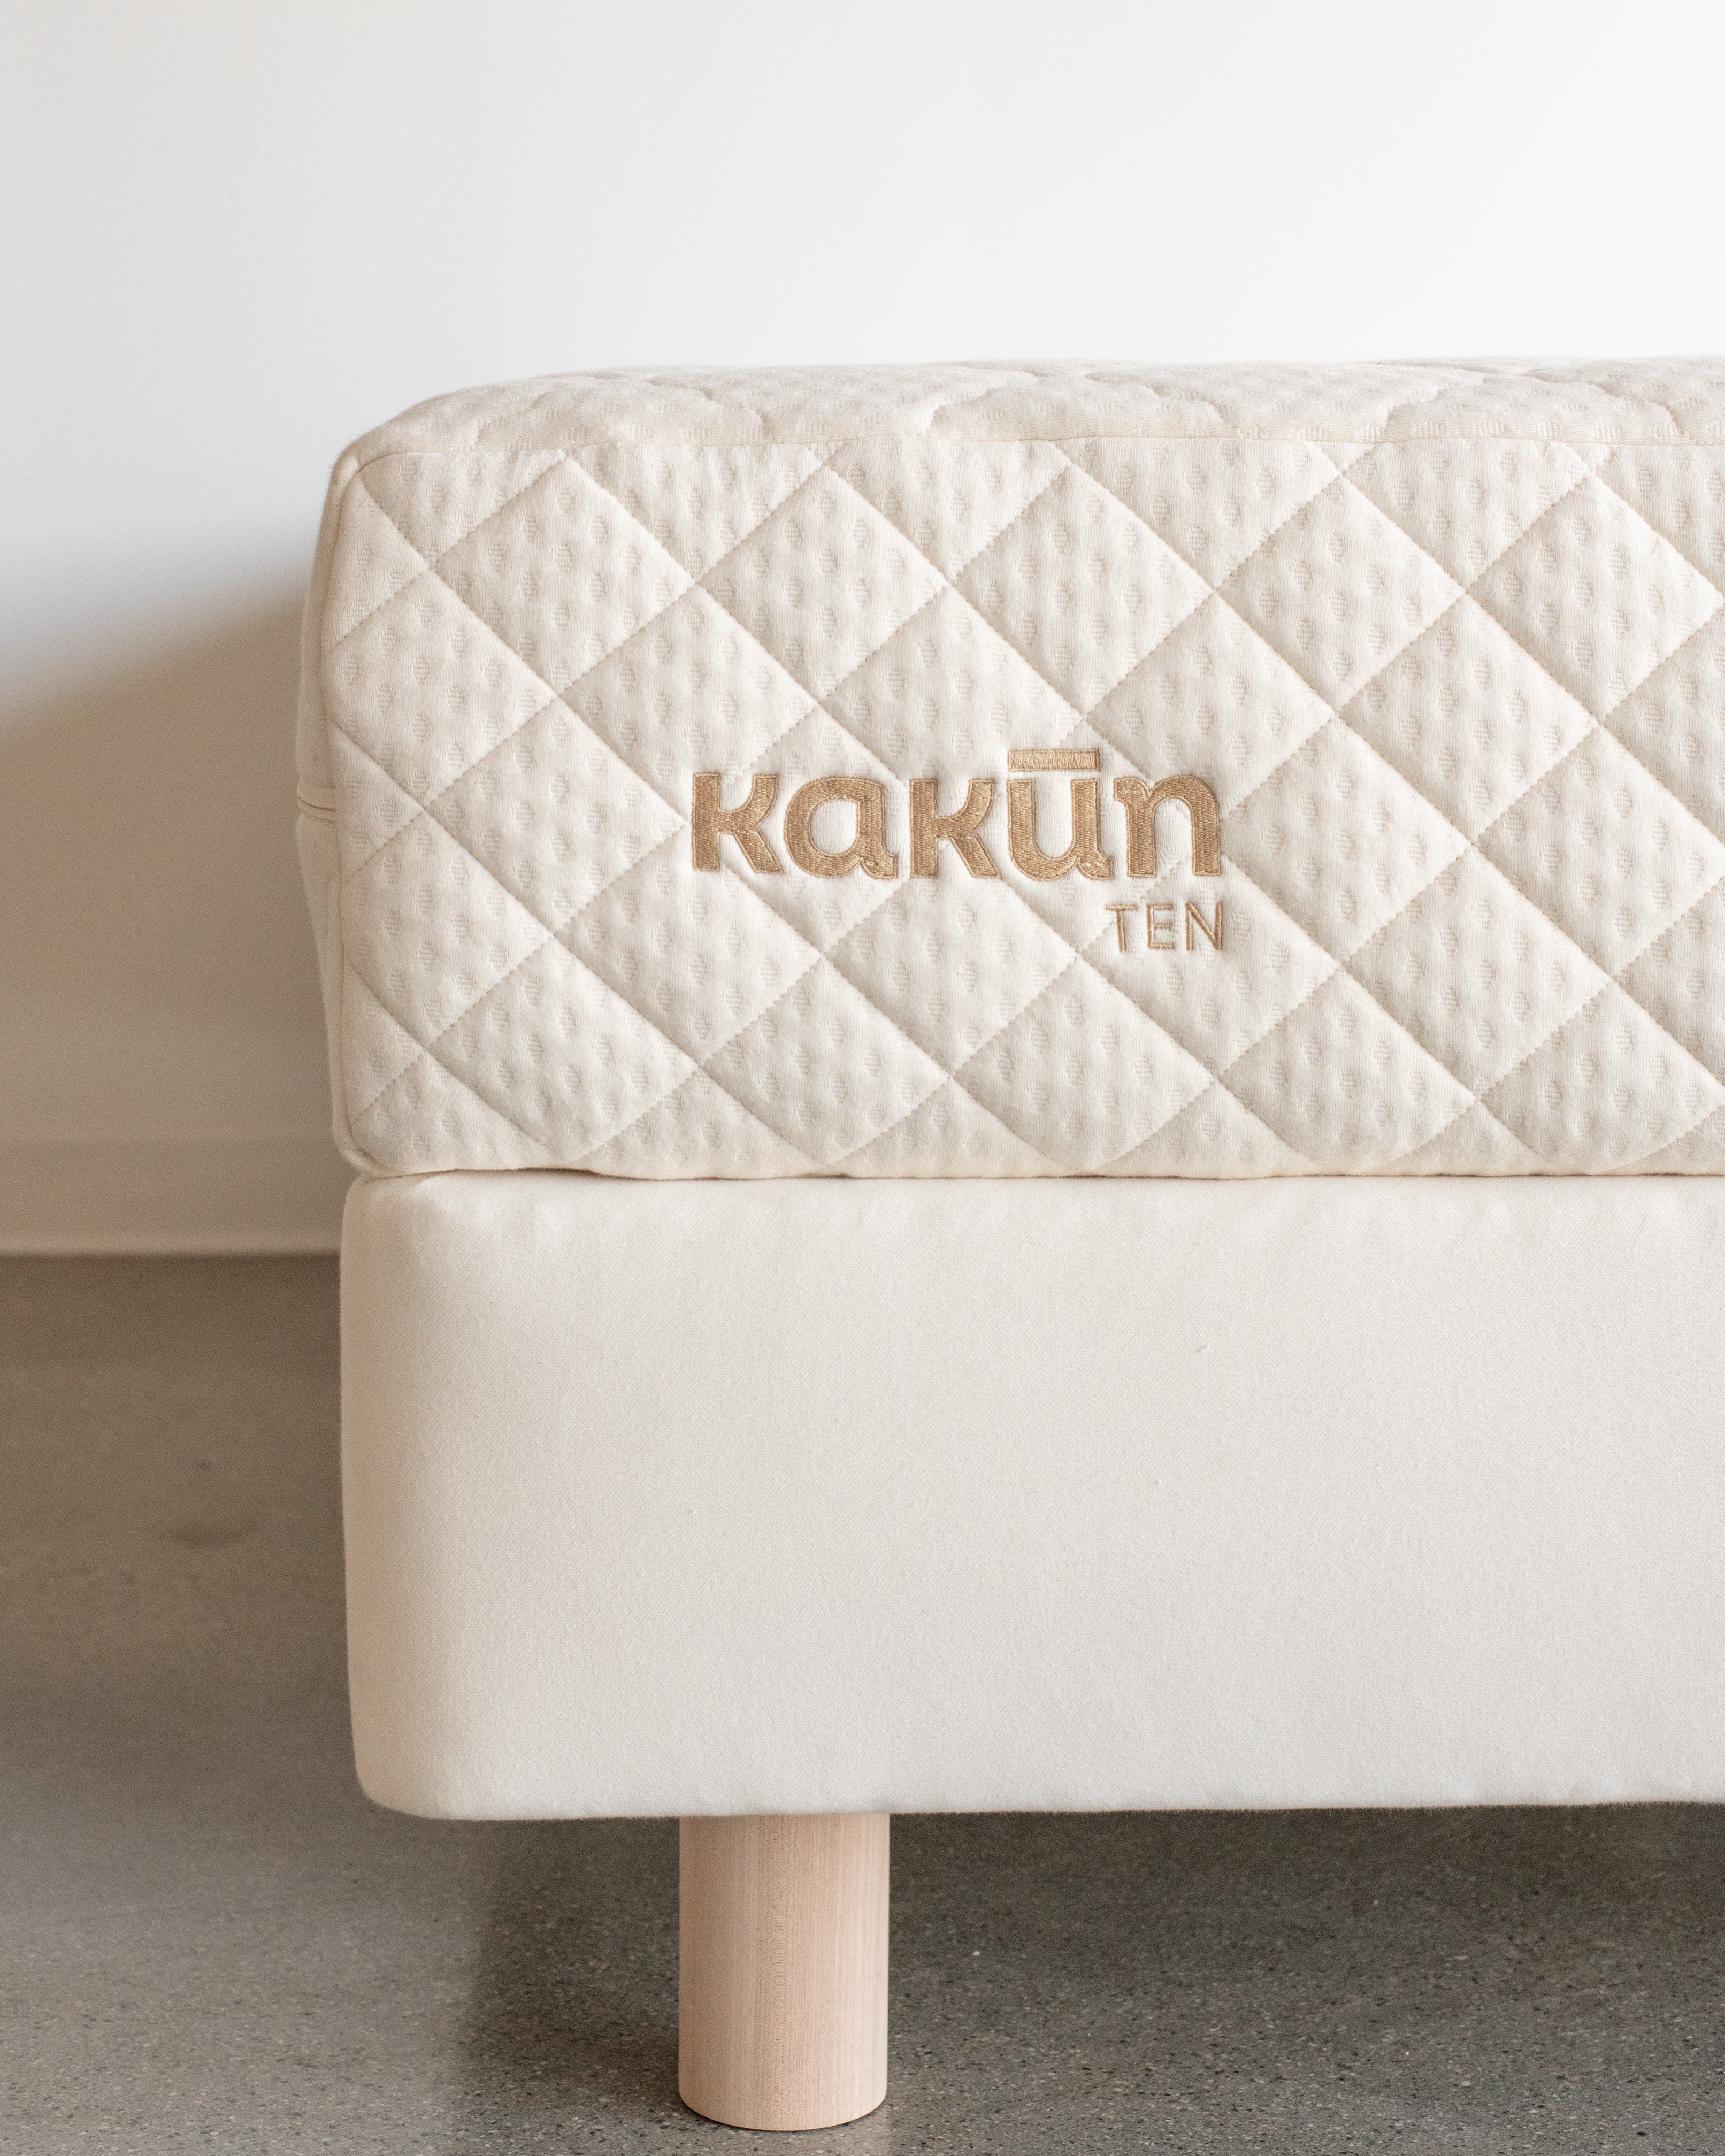 Kakun Ten Organic Mattress Made in Canada